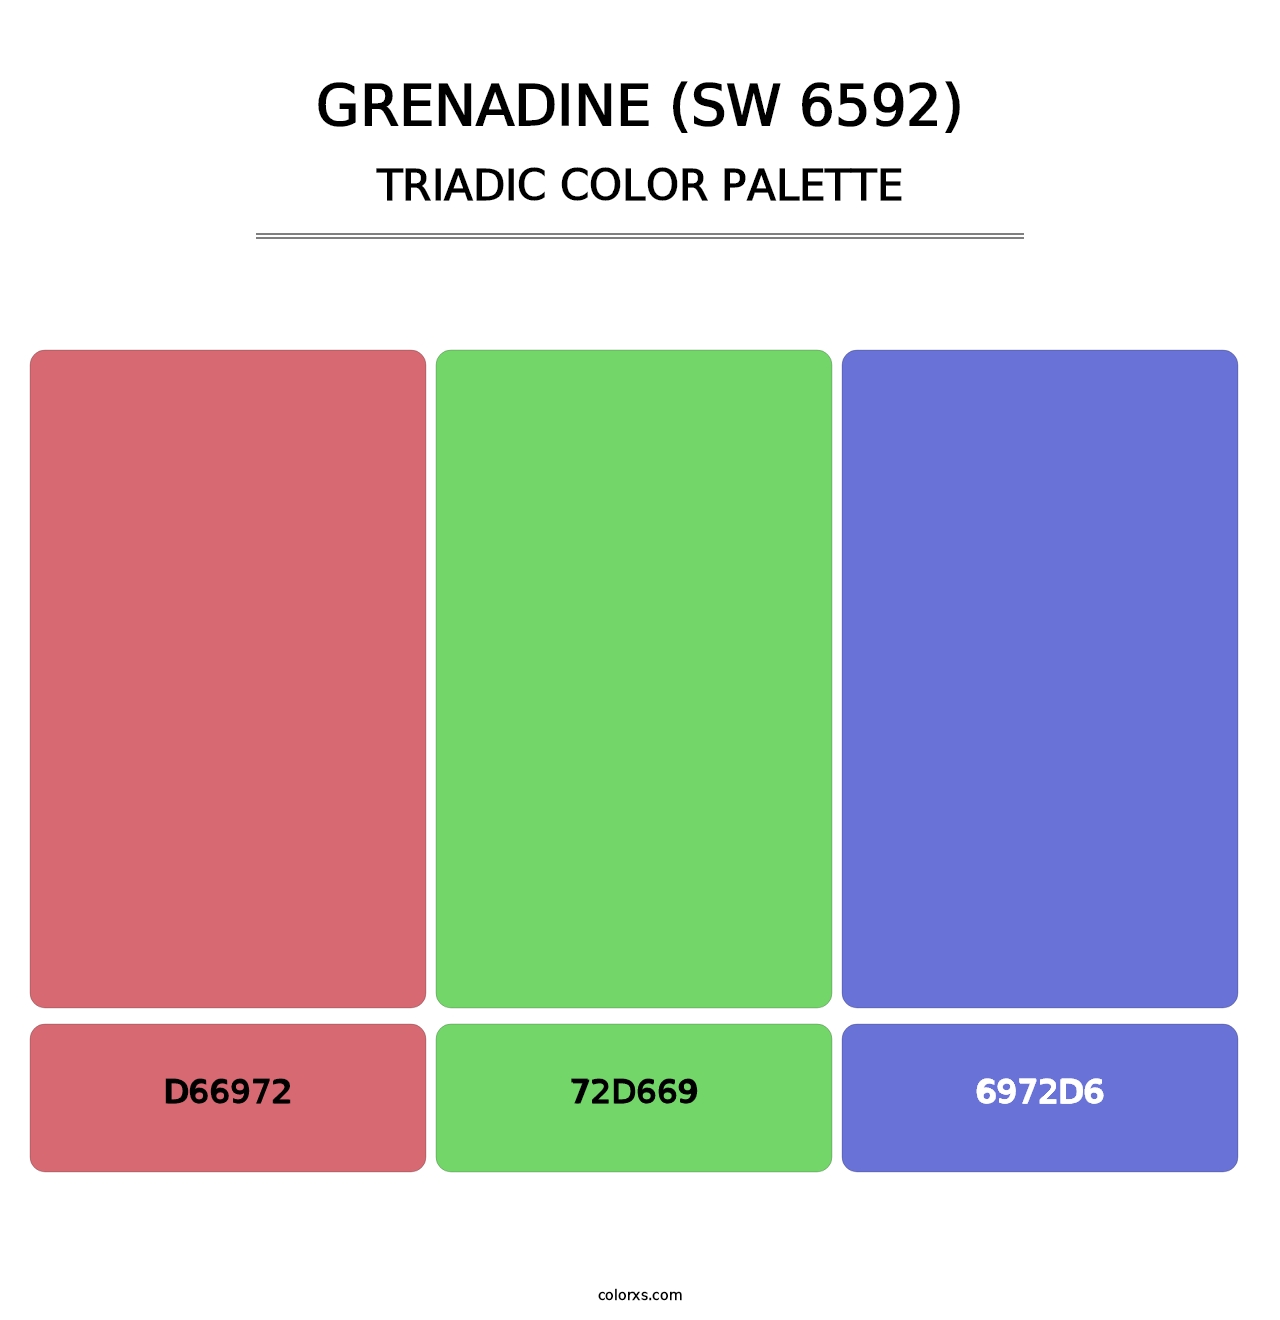 Grenadine (SW 6592) - Triadic Color Palette